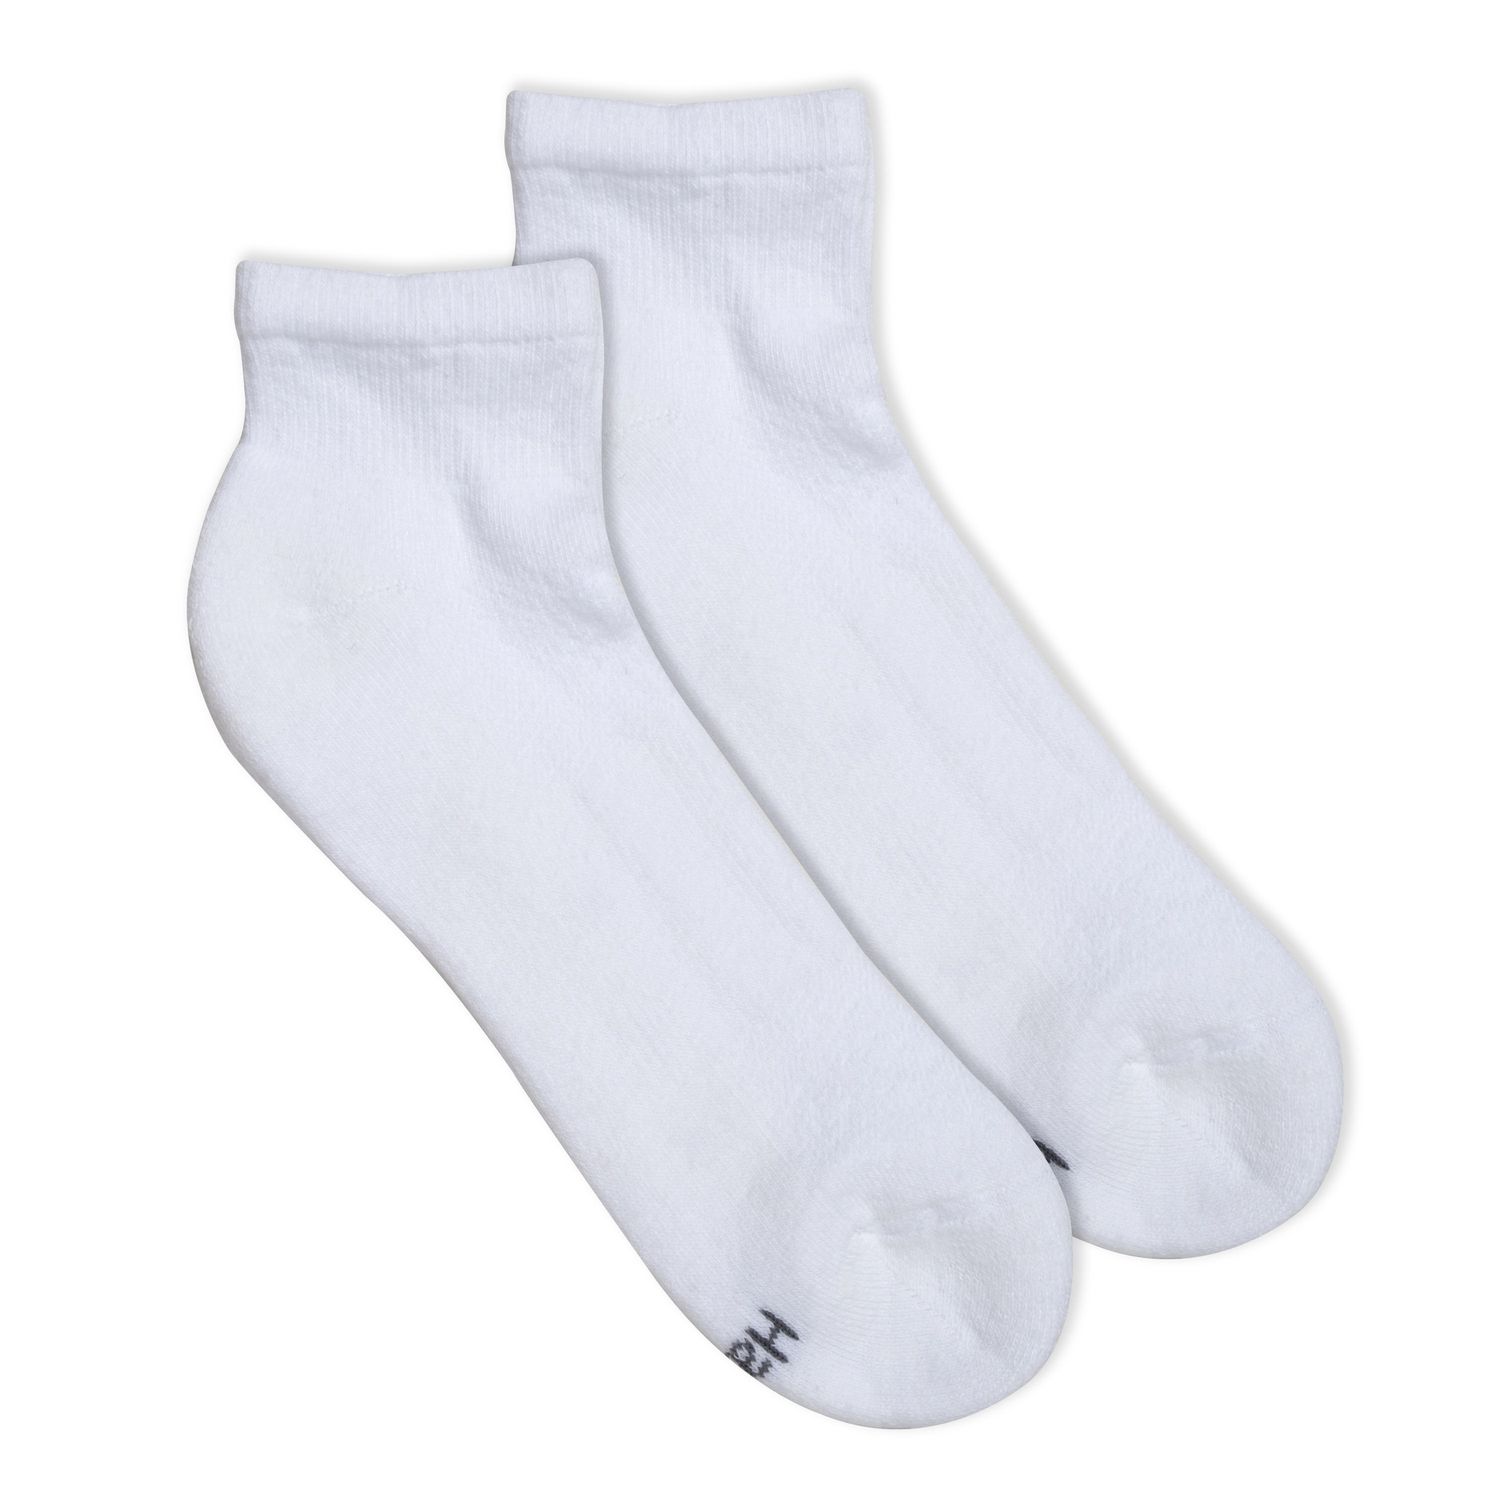 Hanes X-Temp Men's Ankle Socks - Pack of 4 | Walmart Canada